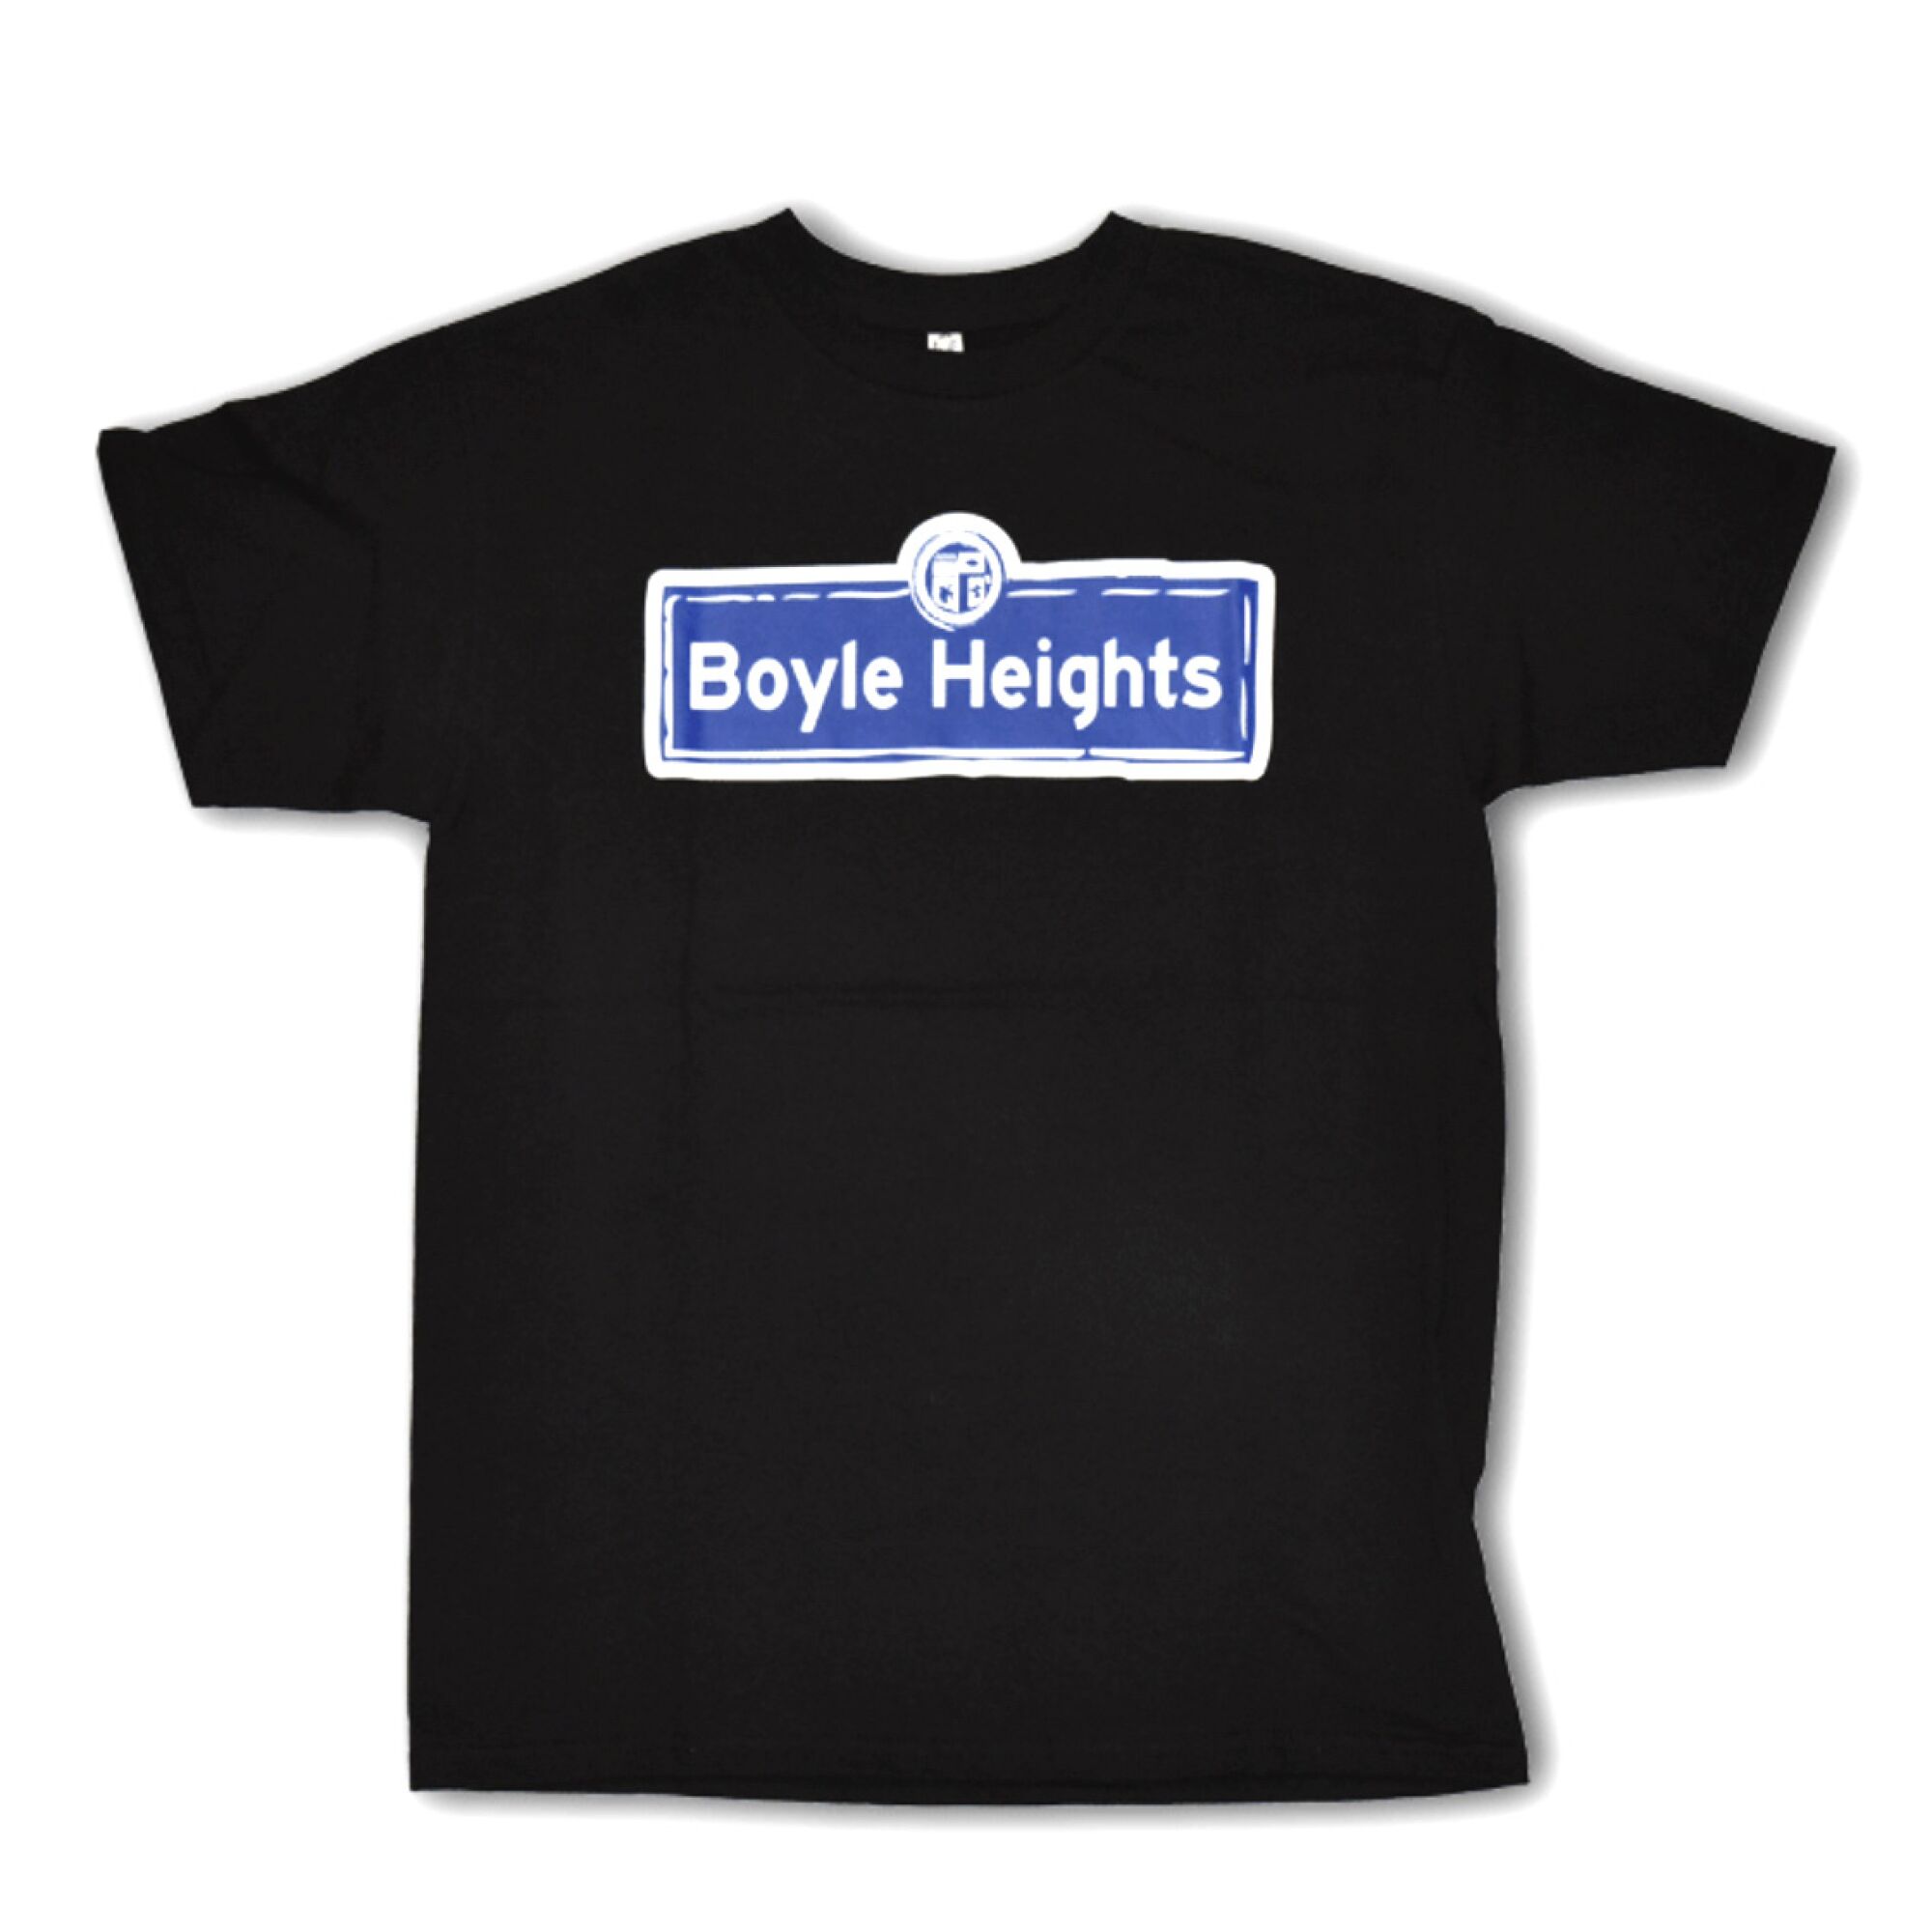 GIFT GUIDE - MERCH: Espacio 1839 Boyle Heights T-shirt